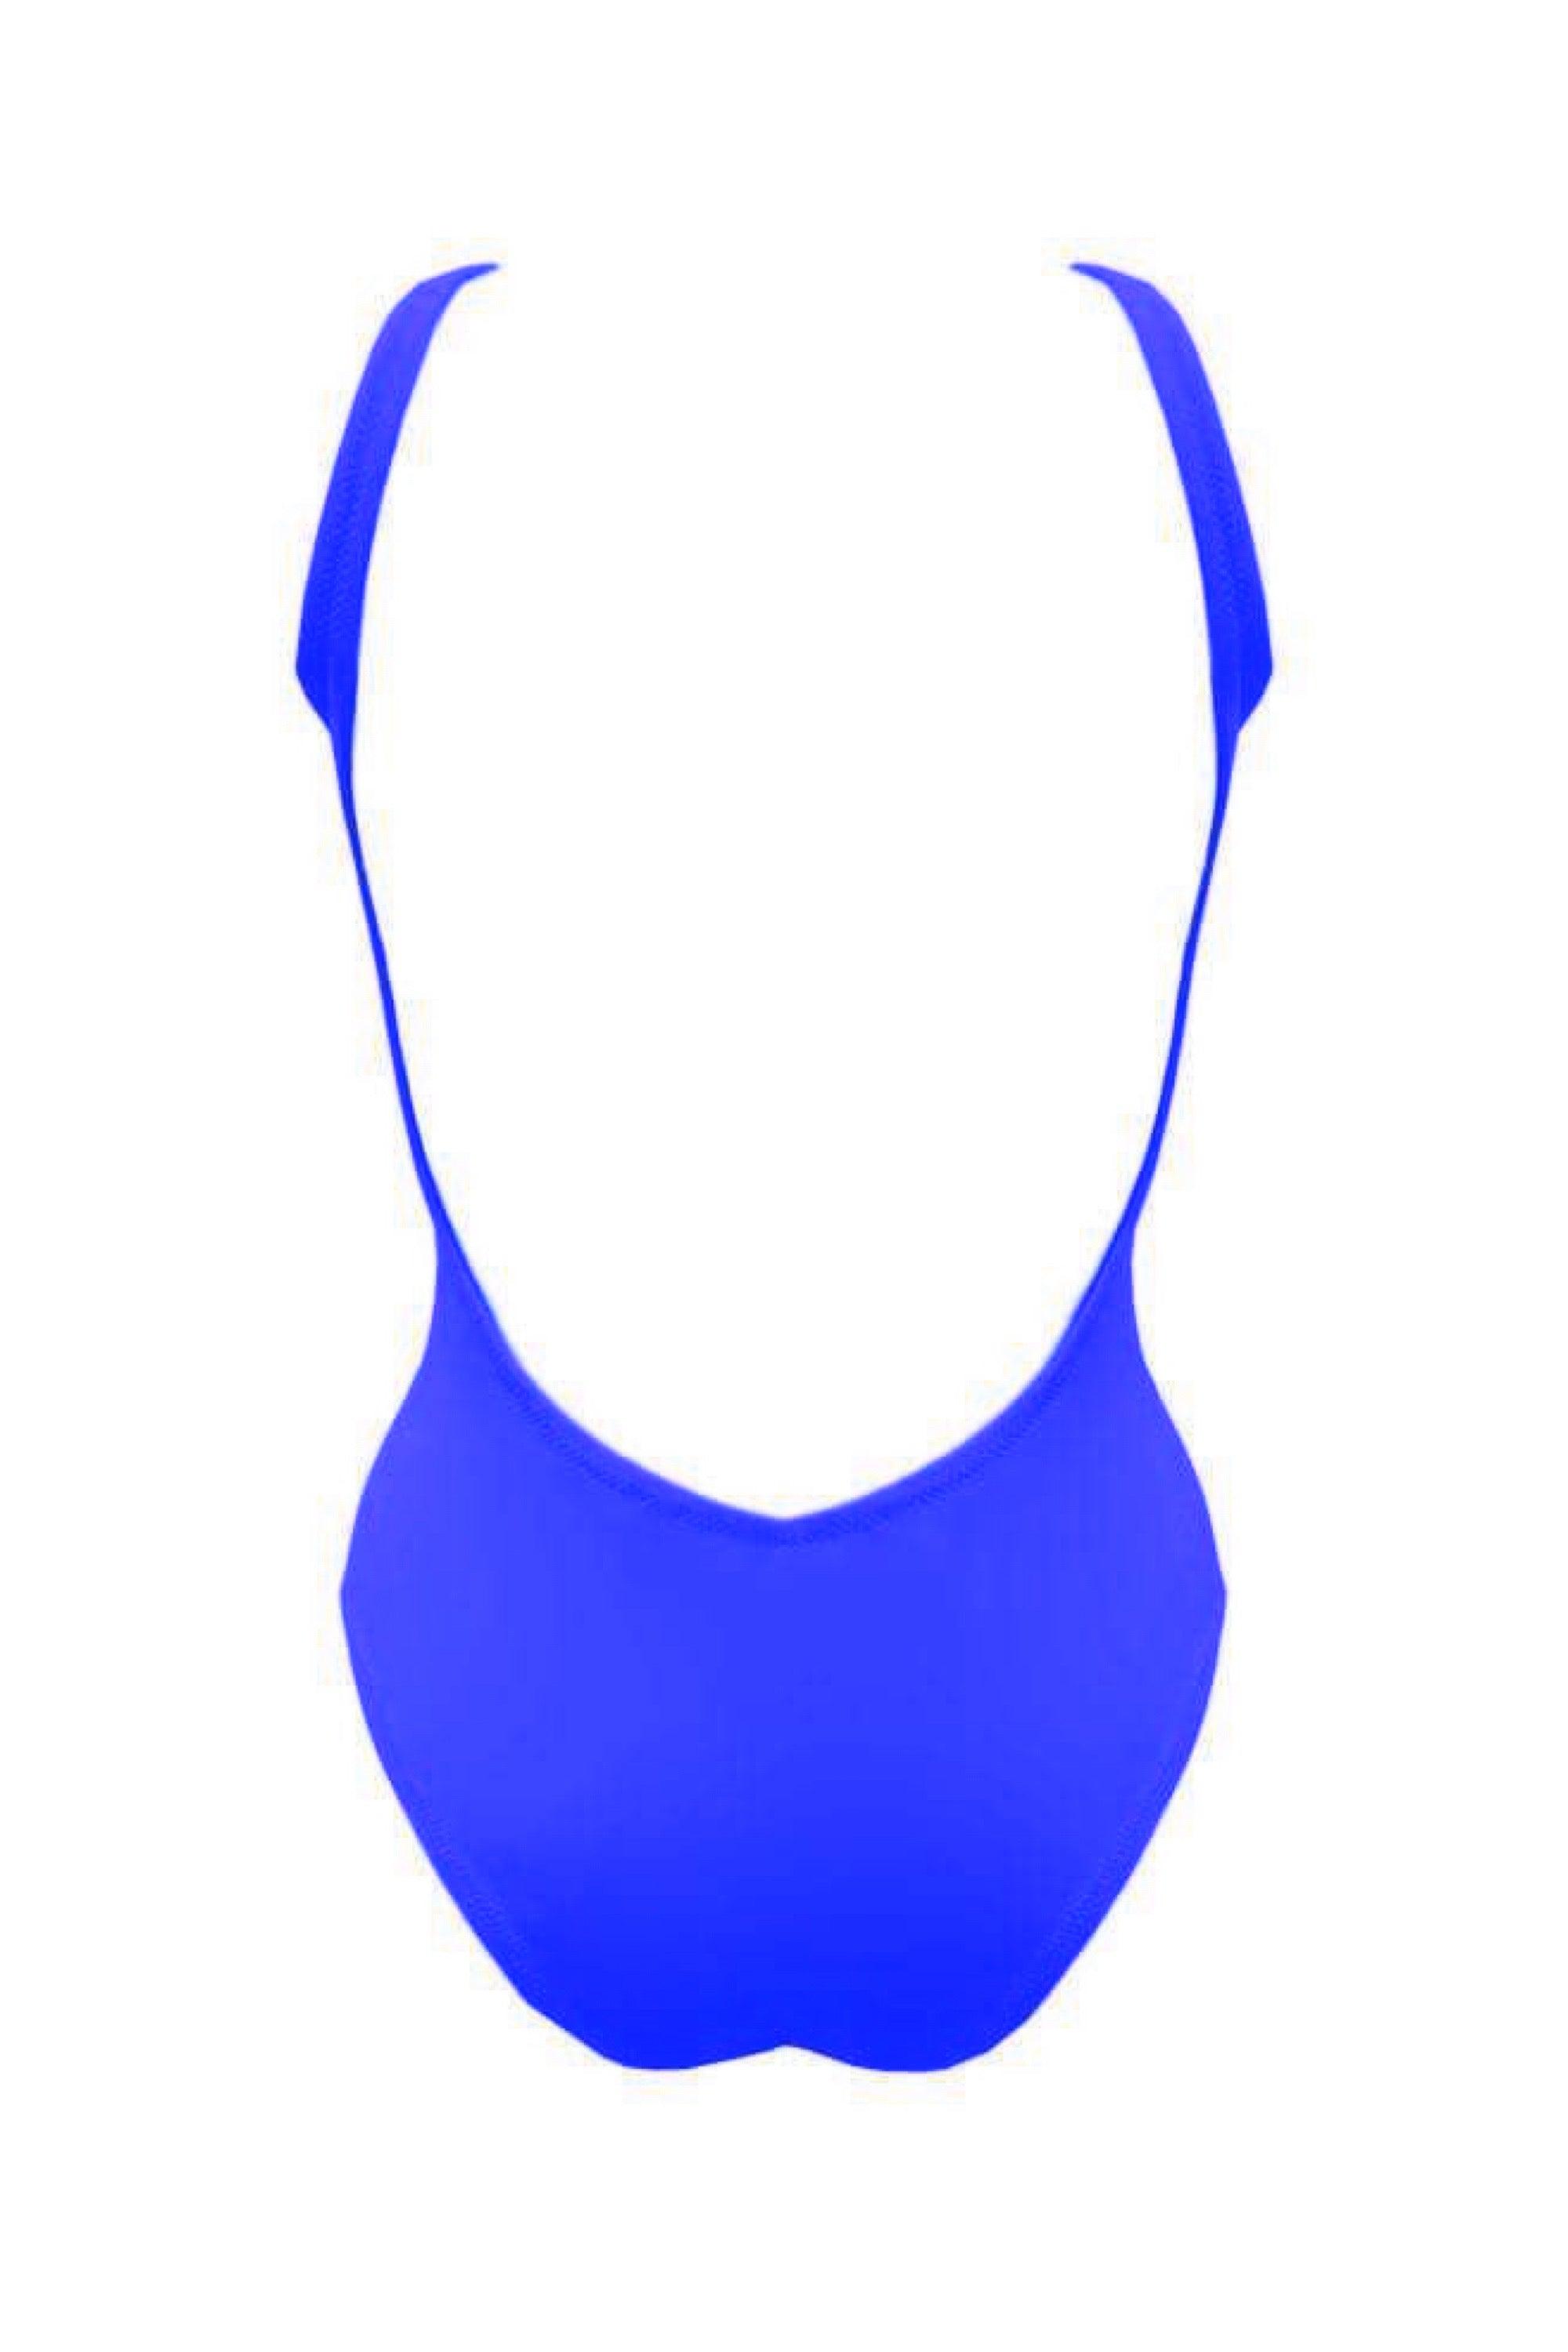 Malibu Electric swimsuit - yesUndress